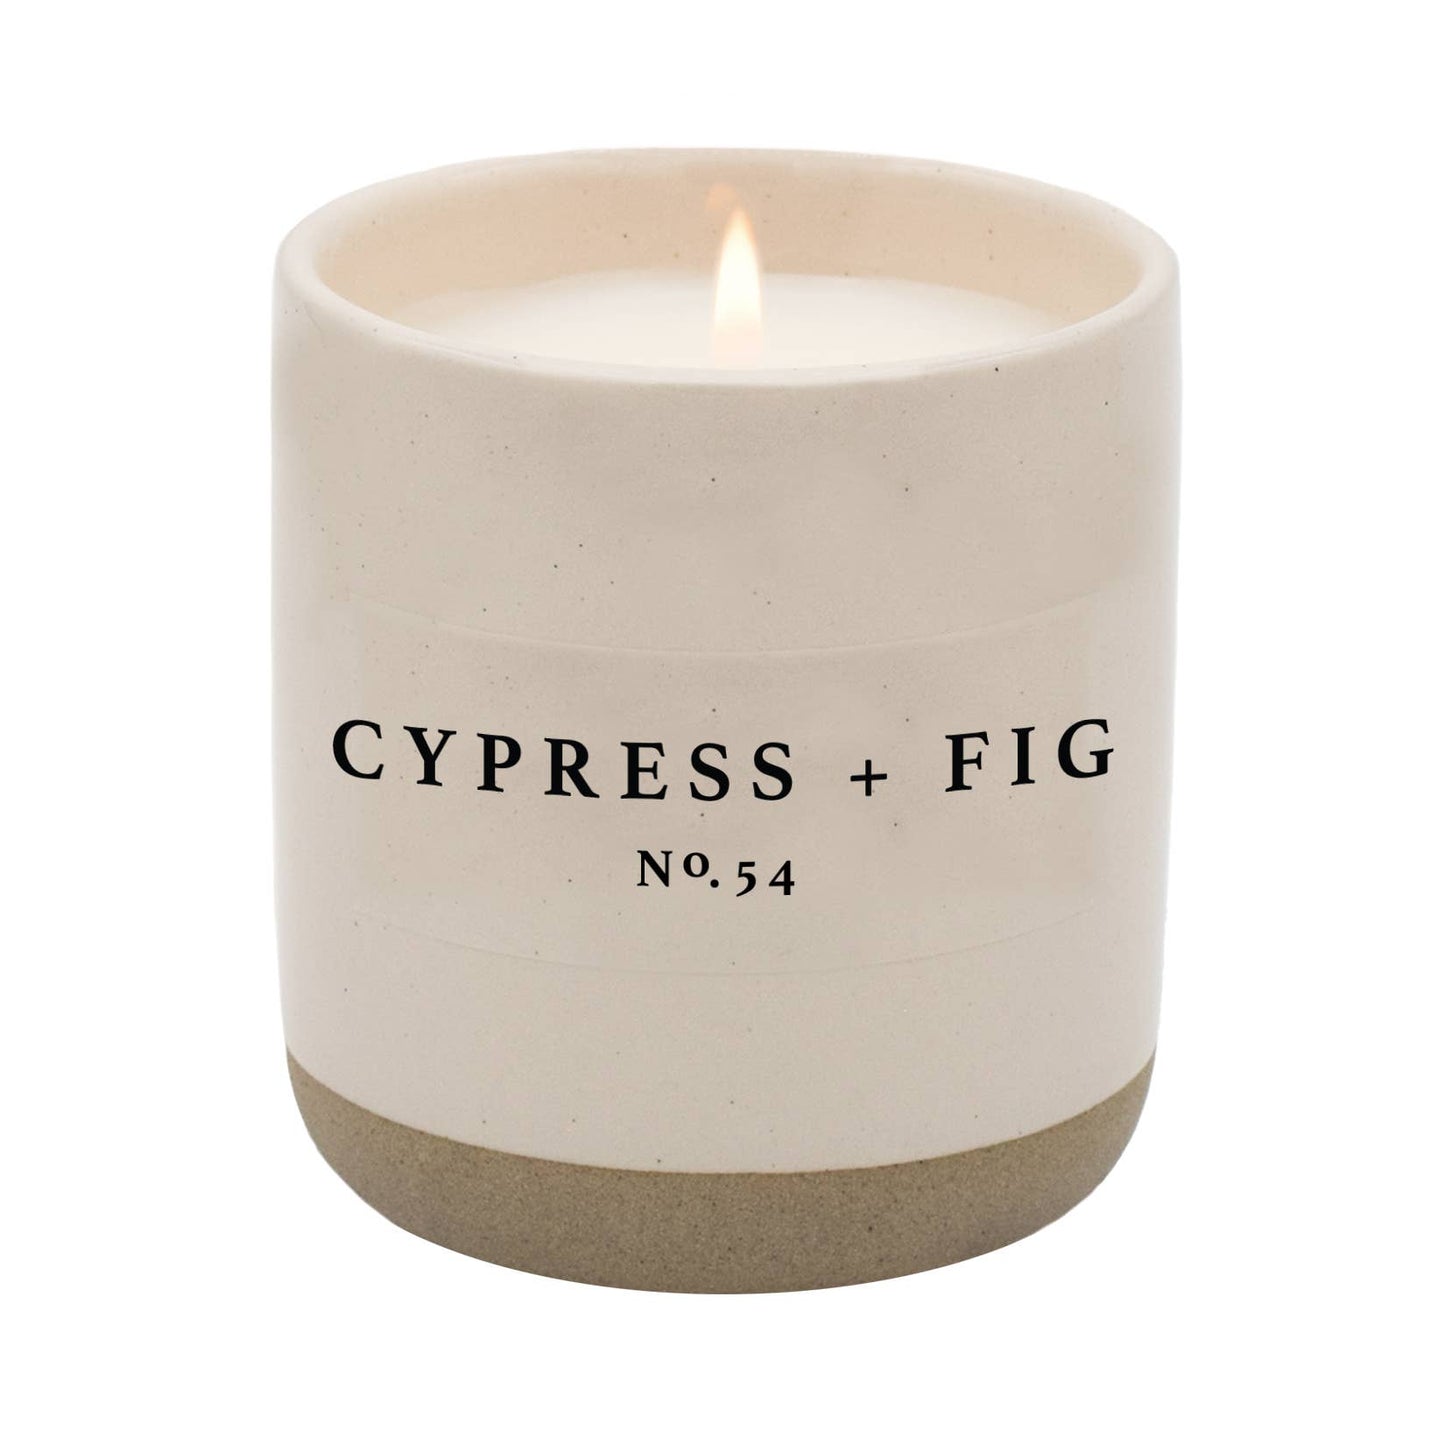 cypress and fig soy candle - cream stoneware jar - 12 oz